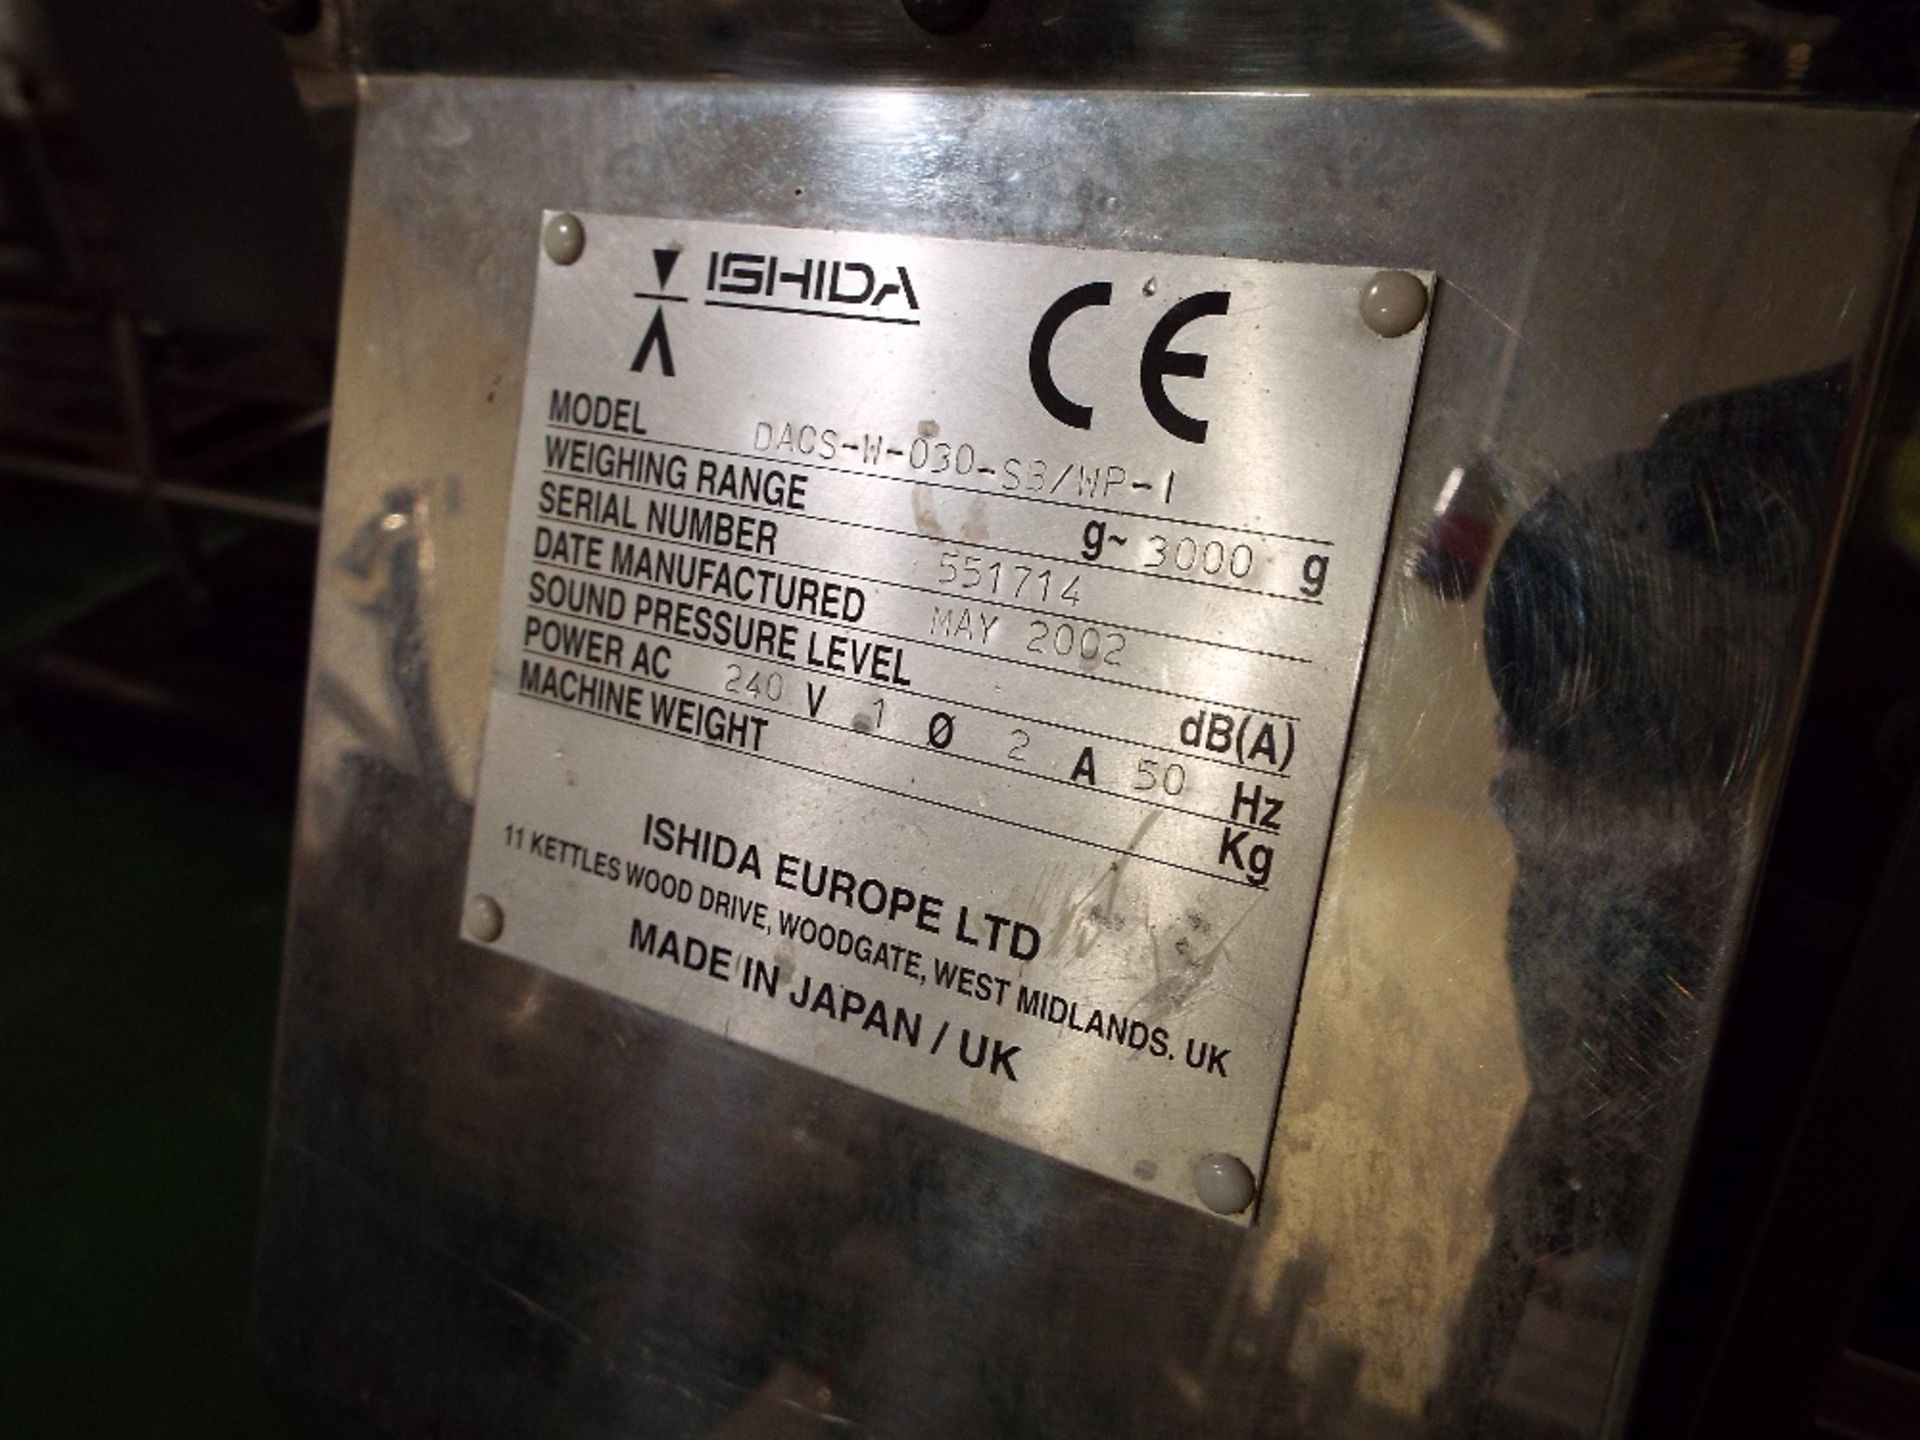 Ishida Weigh Checker & Safeline Metal Detector - SPARES REPAIR - Image 2 of 6